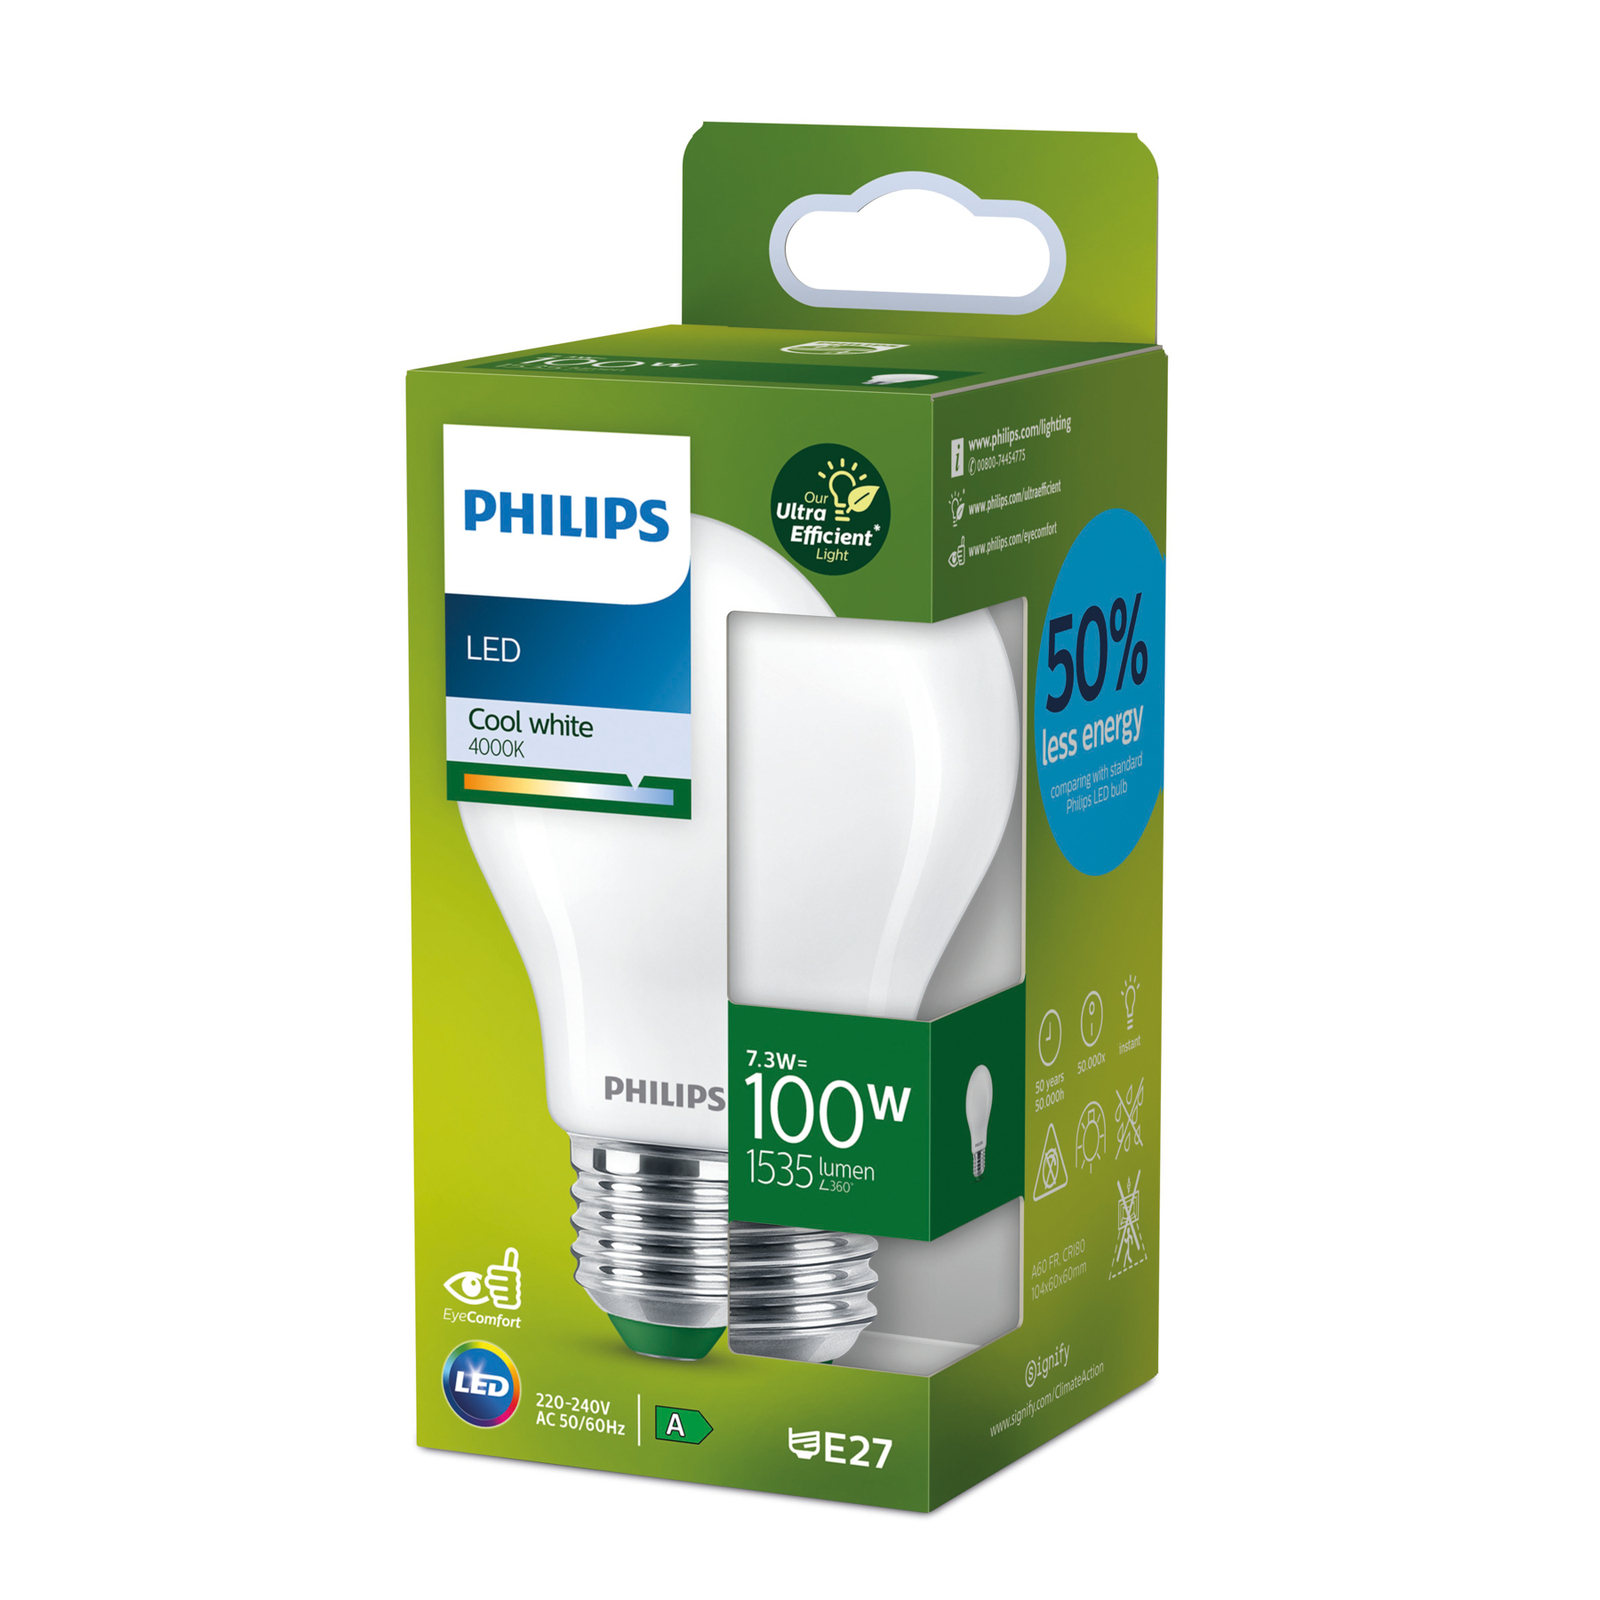 Philips E27 LED A60 7,3W 1535lm 4.000K satinato